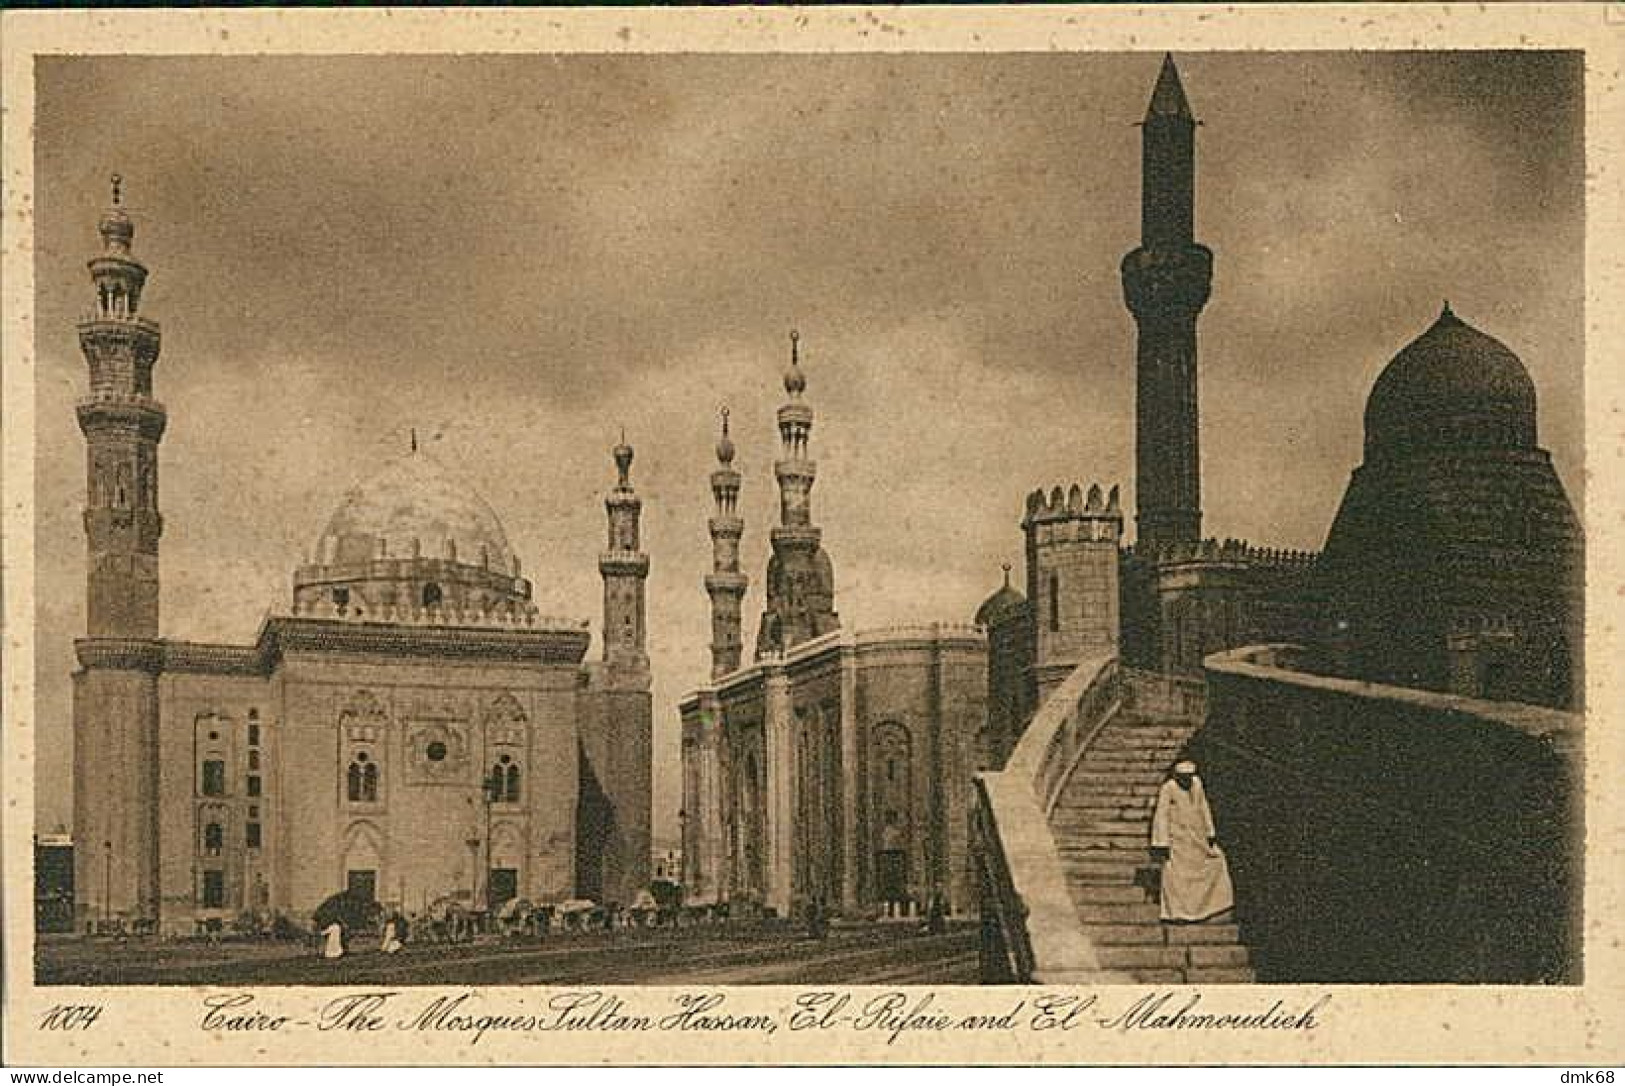 EGYPT - CAIRO - THE MOSQUES SULTAN HASSAN - EL RIFAI & EL- MAHMOUDIEH (1004) EDIT. LEHNERT & LANDROCK 1920s (12663) - Caïro